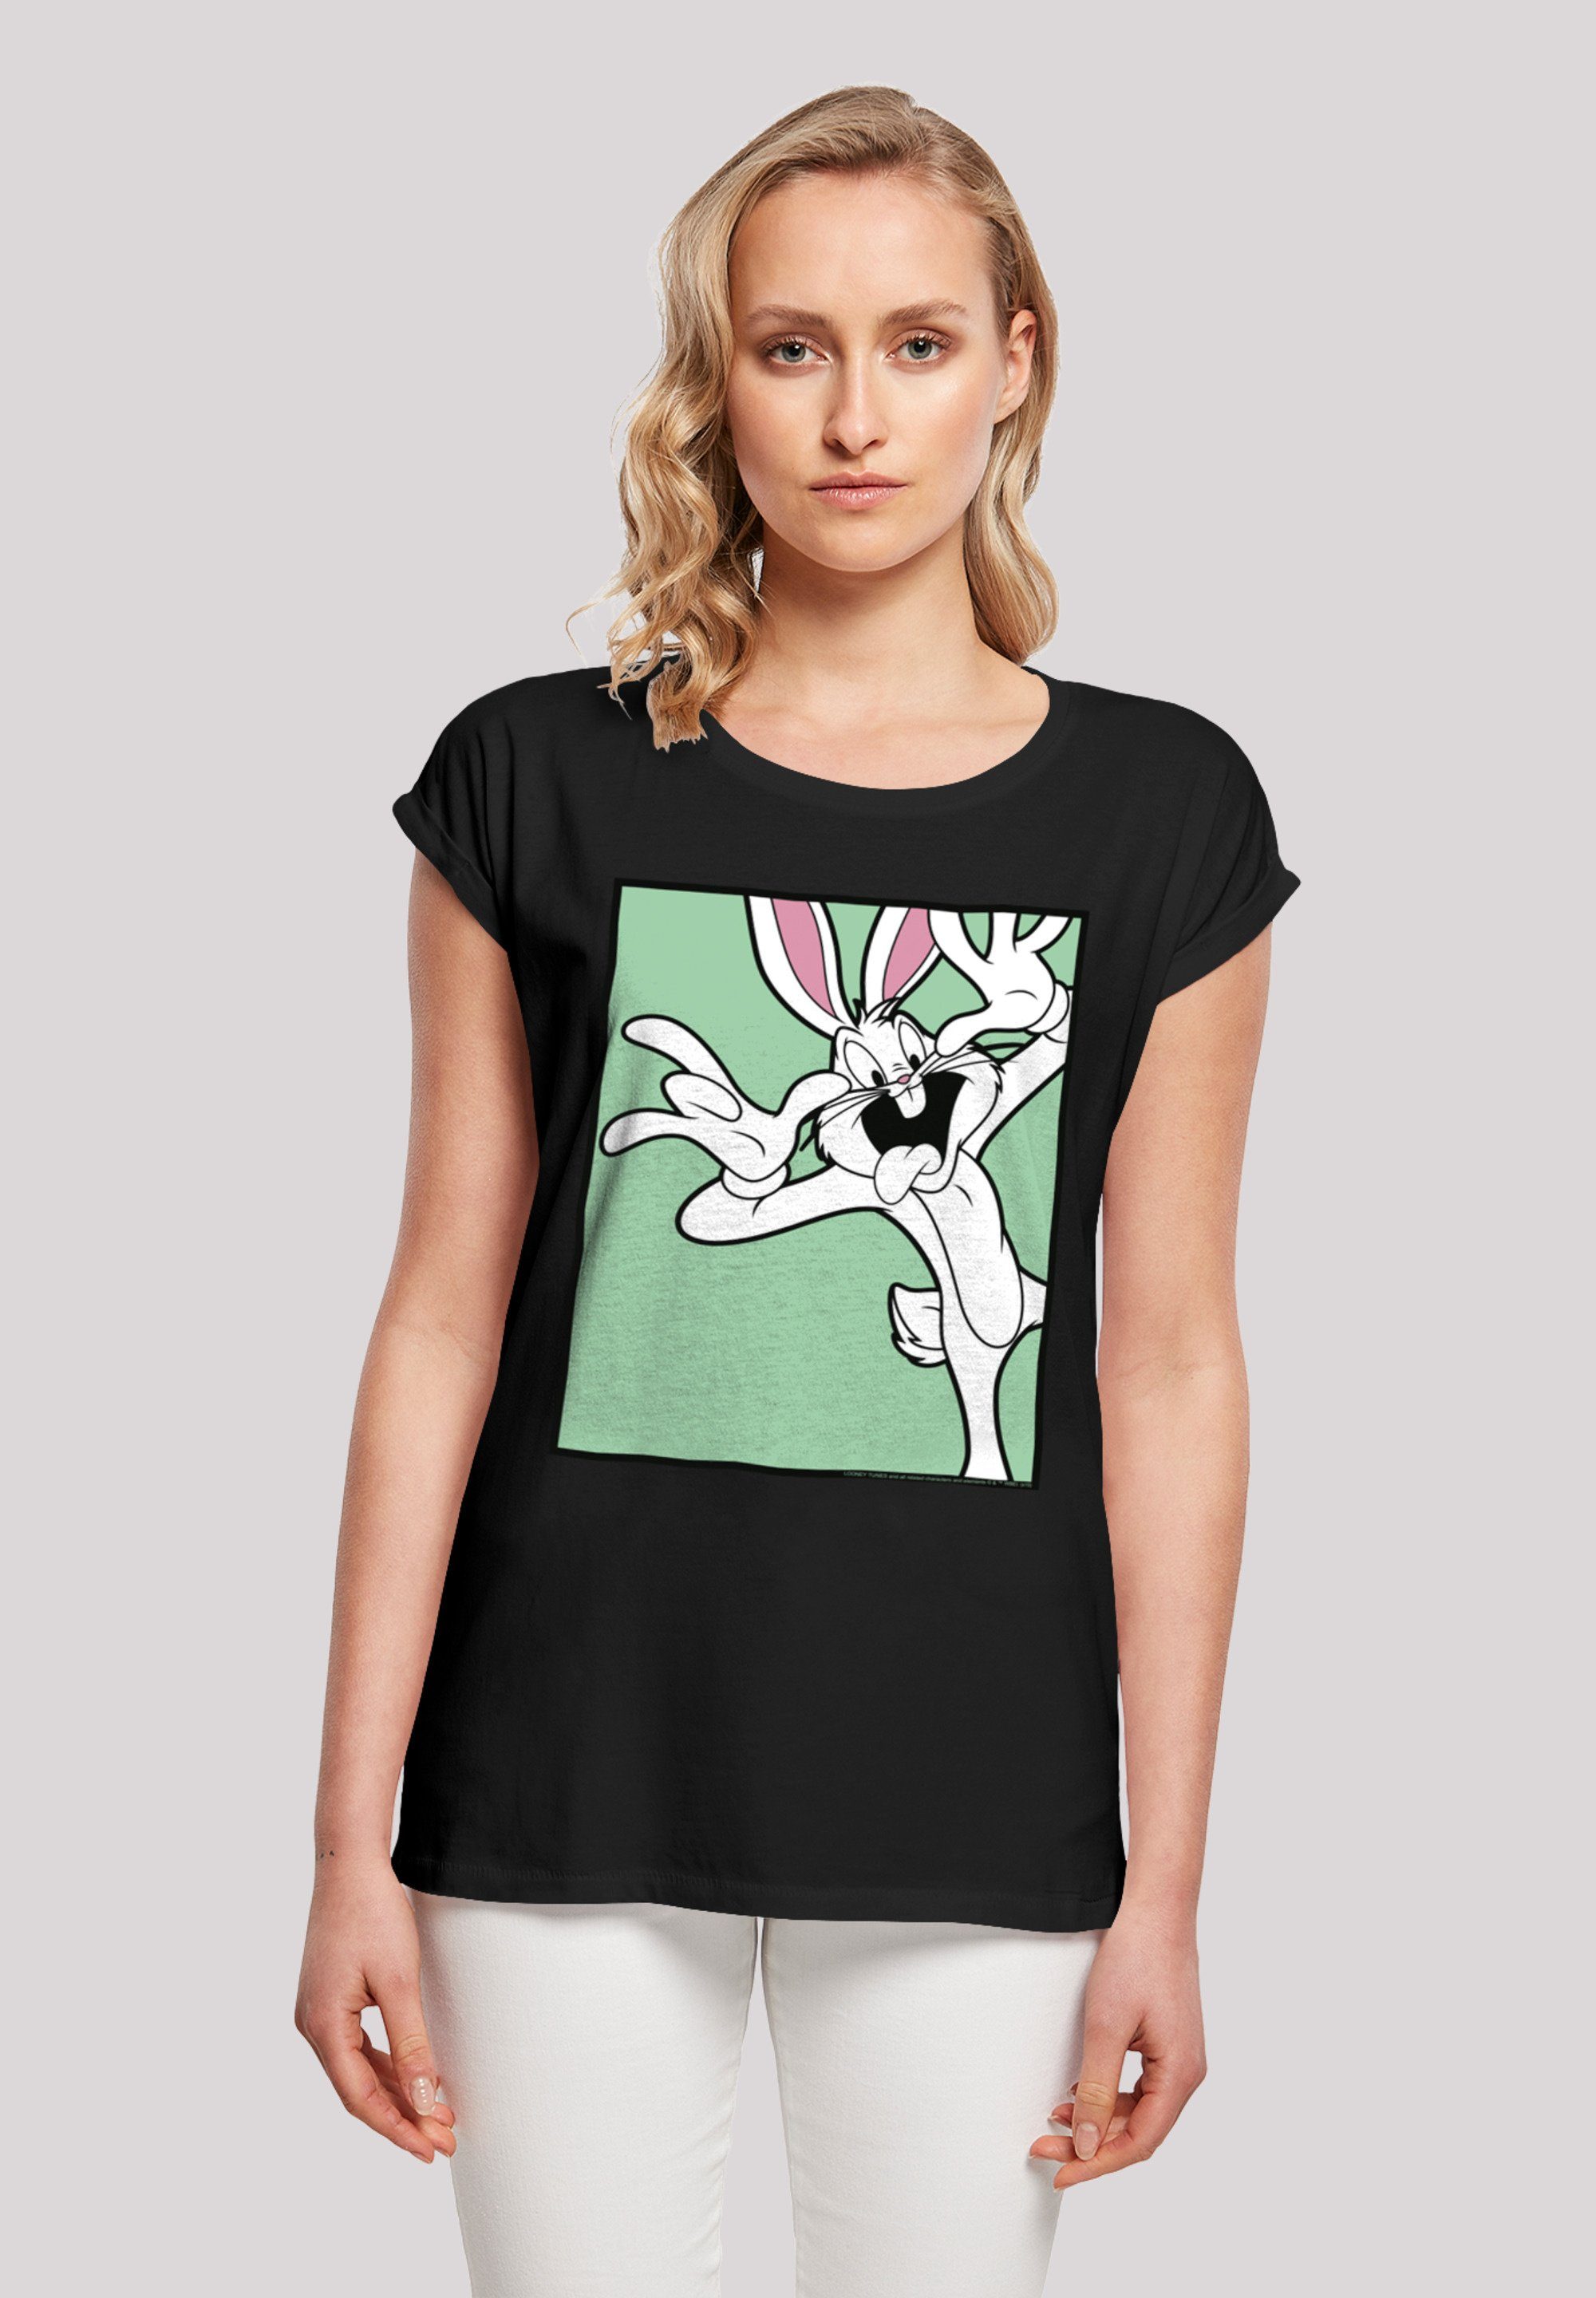 F4NT4STIC T-Shirt Looney Tunes Bugs Bunny Funny Face Print, Sehr weicher  Baumwollstoff mit hohem Tragekomfort